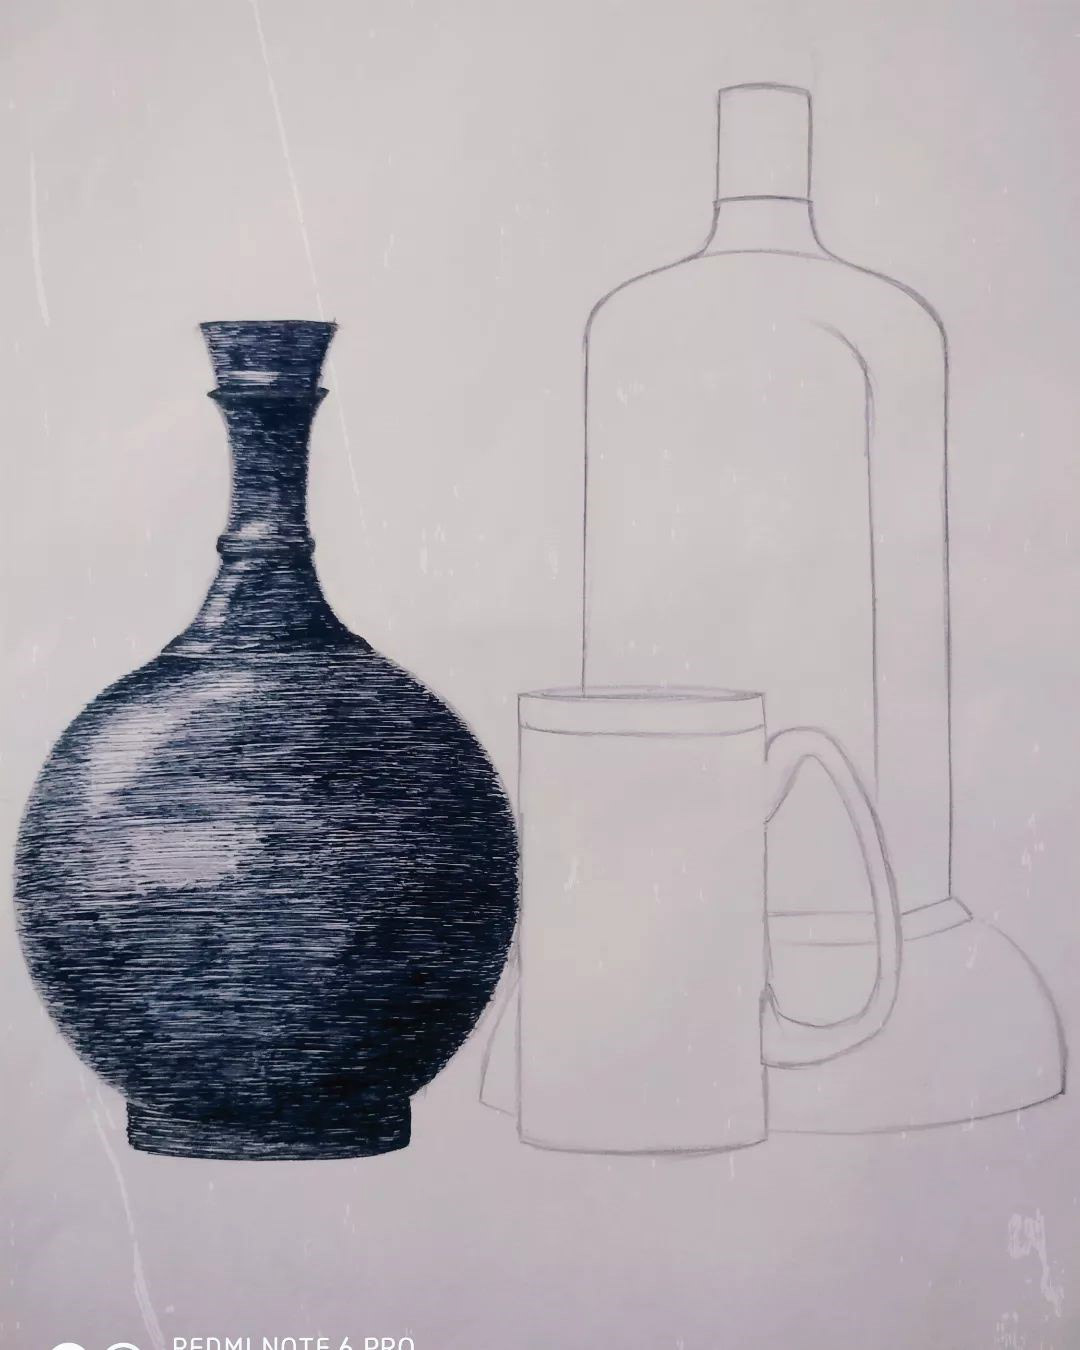 Image may contain: art, vase and drawing